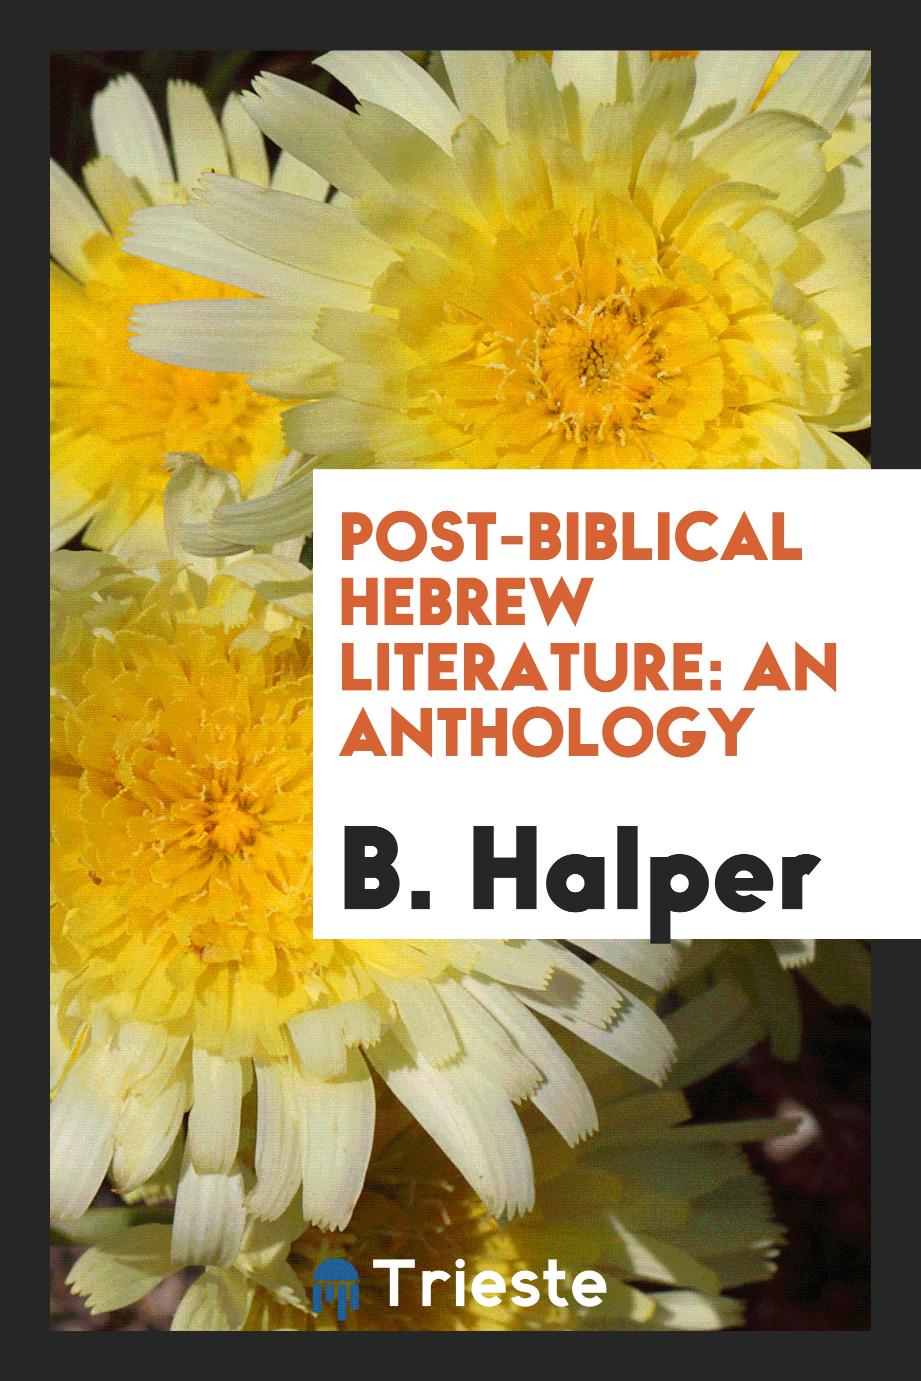 Post-Biblical Hebrew literature: an anthology